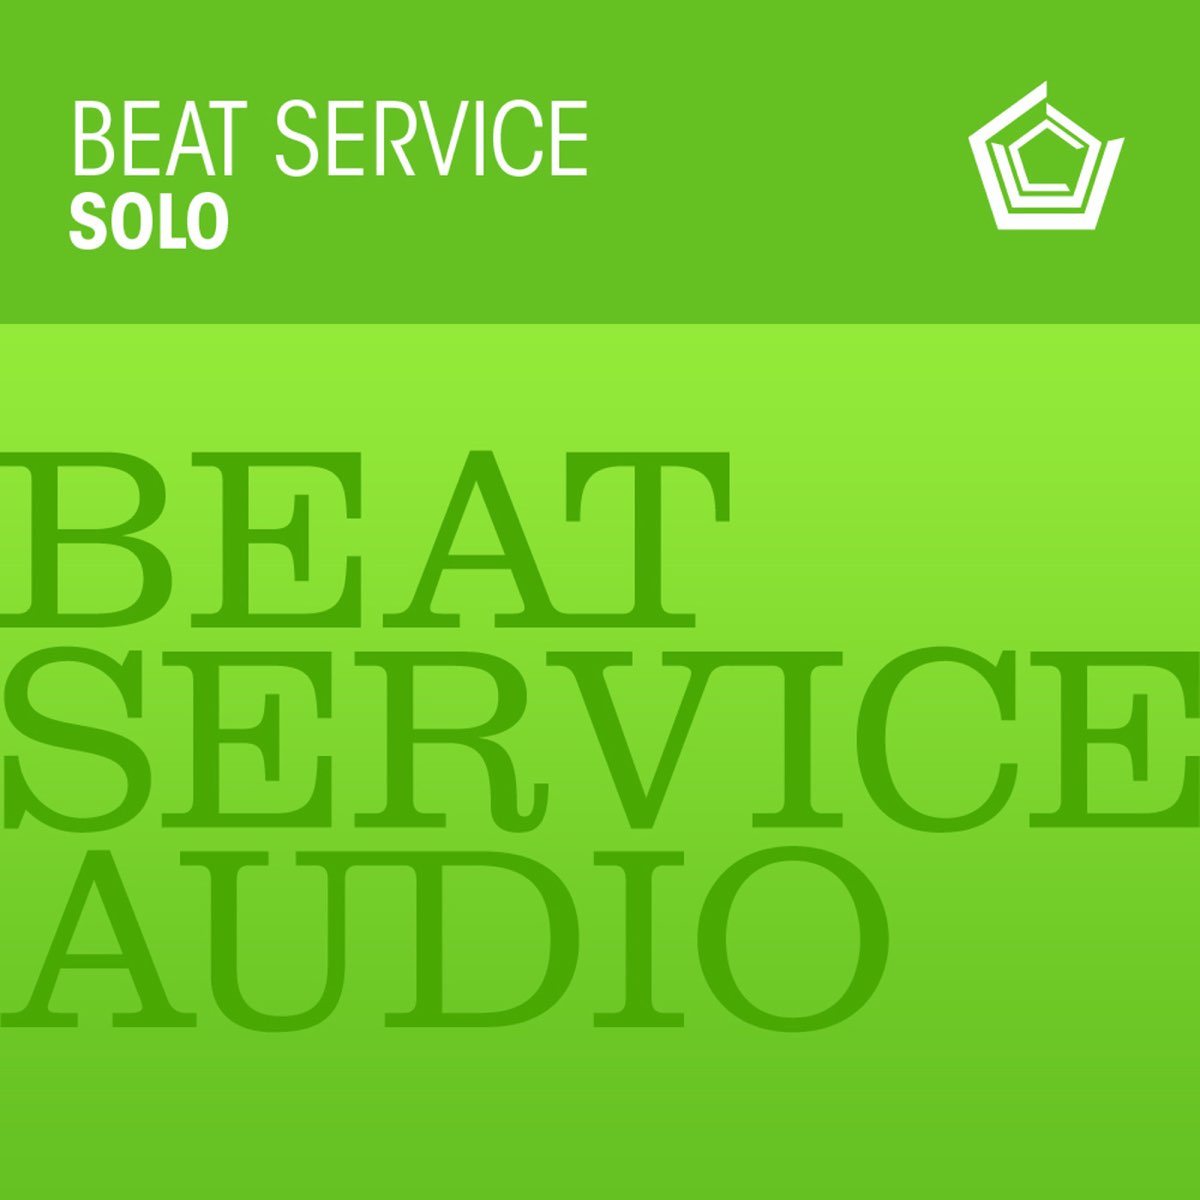 Beat service. Битс-сервис. Sollos service.